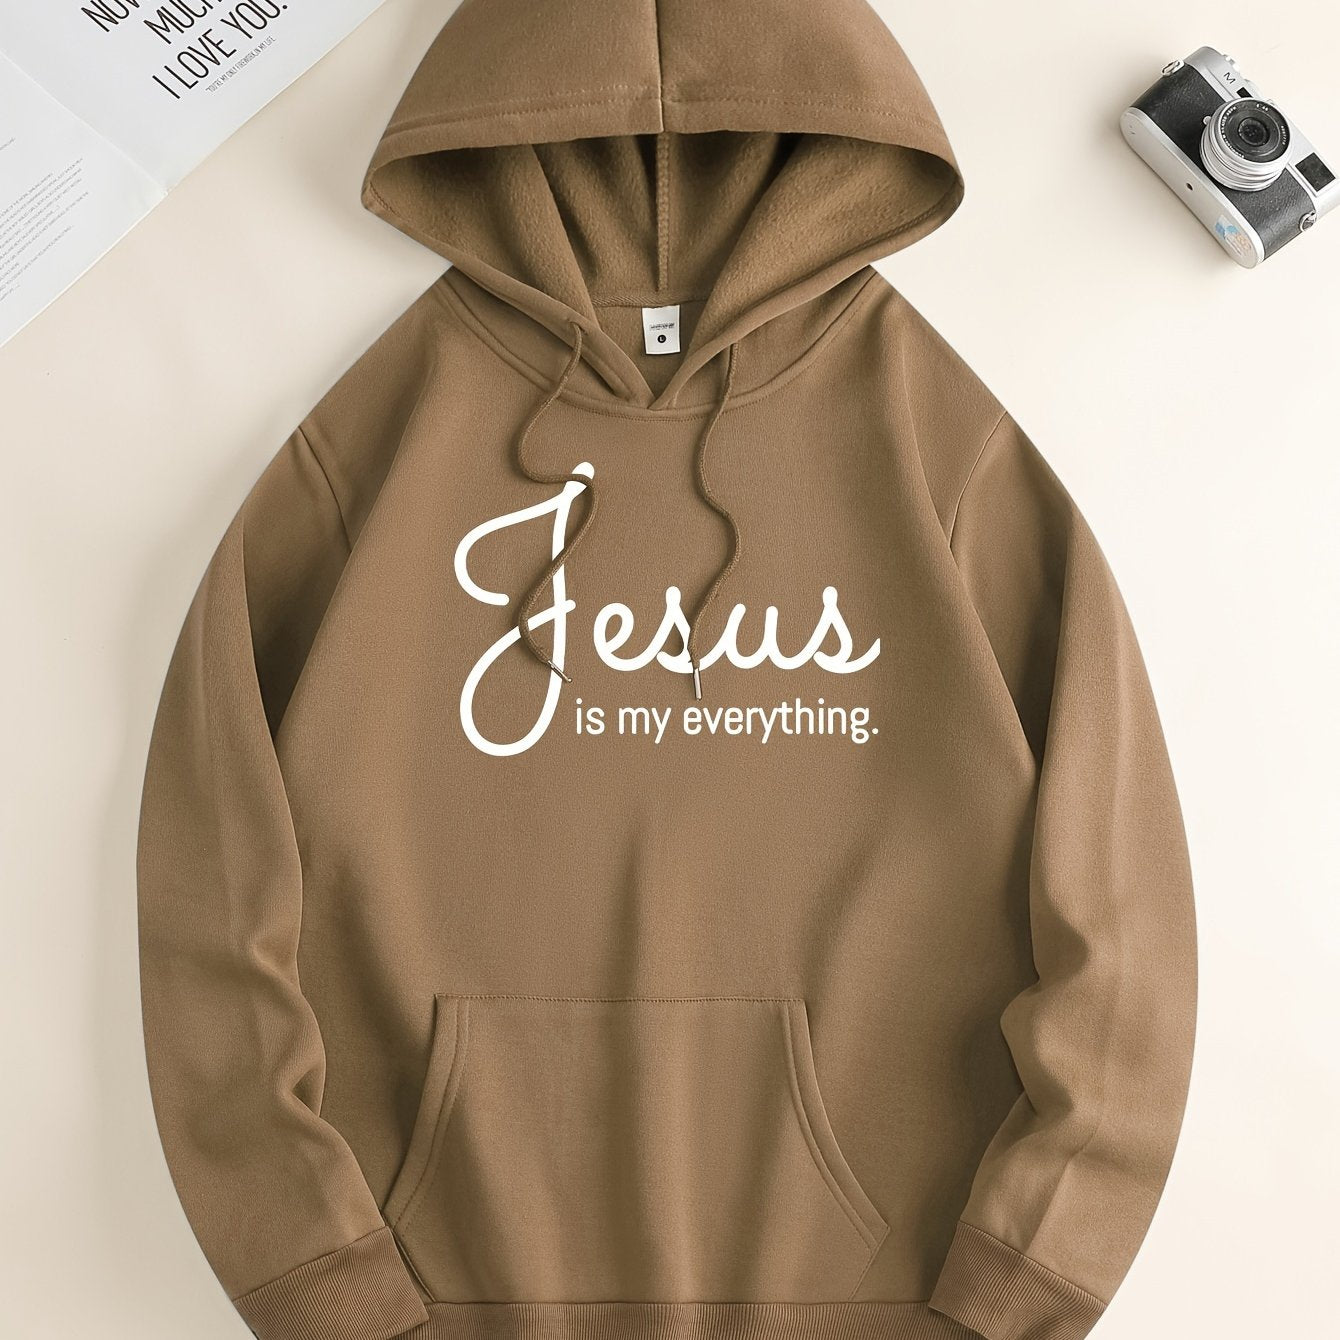 JESUS Is My Everything Unisex Christian Pullover Hooded Sweatshirt claimedbygoddesigns